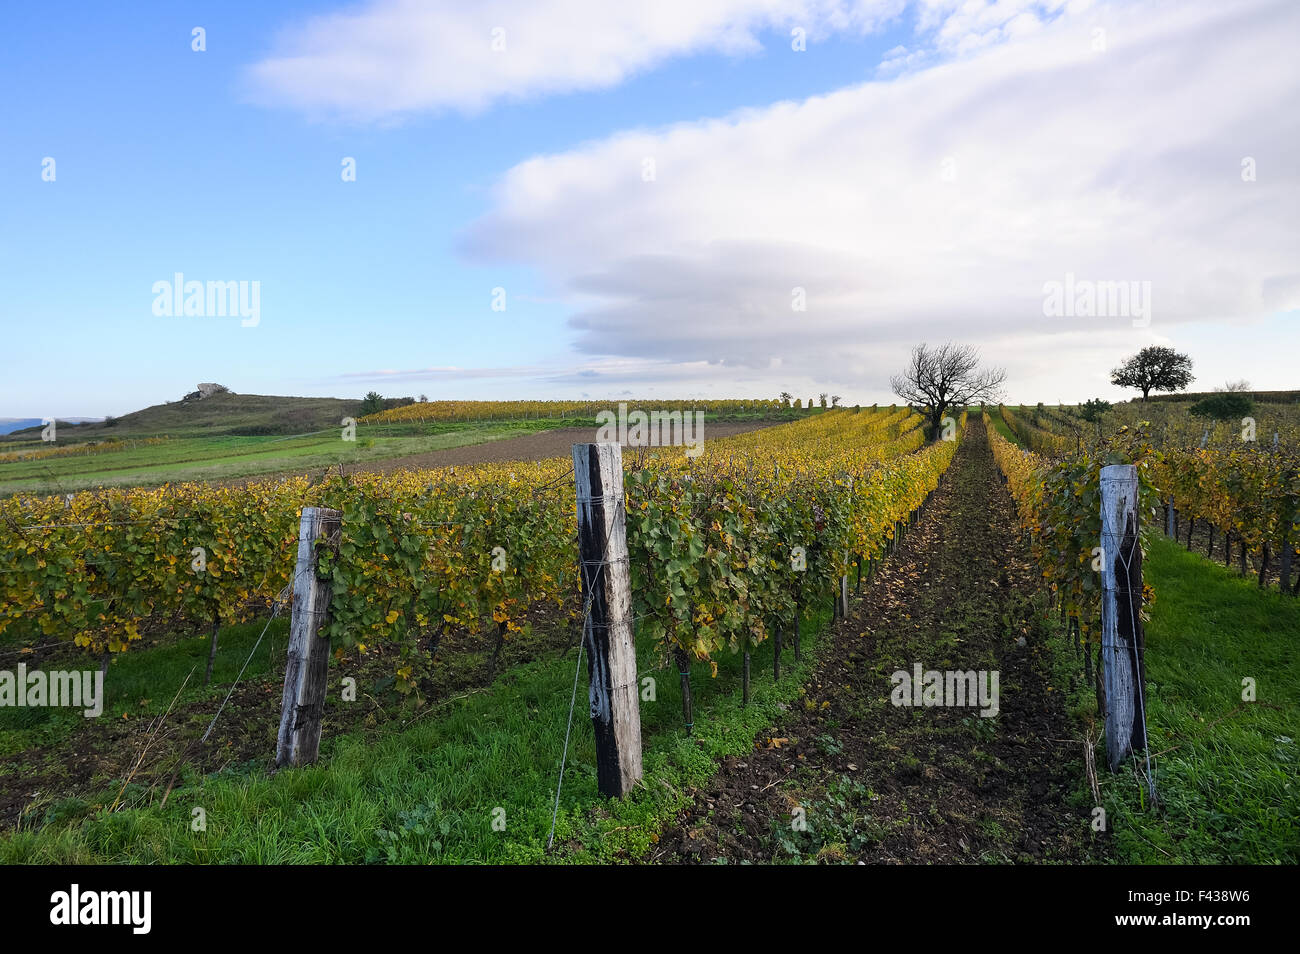 Vineyard near rocks in Burgenland Stock Photo